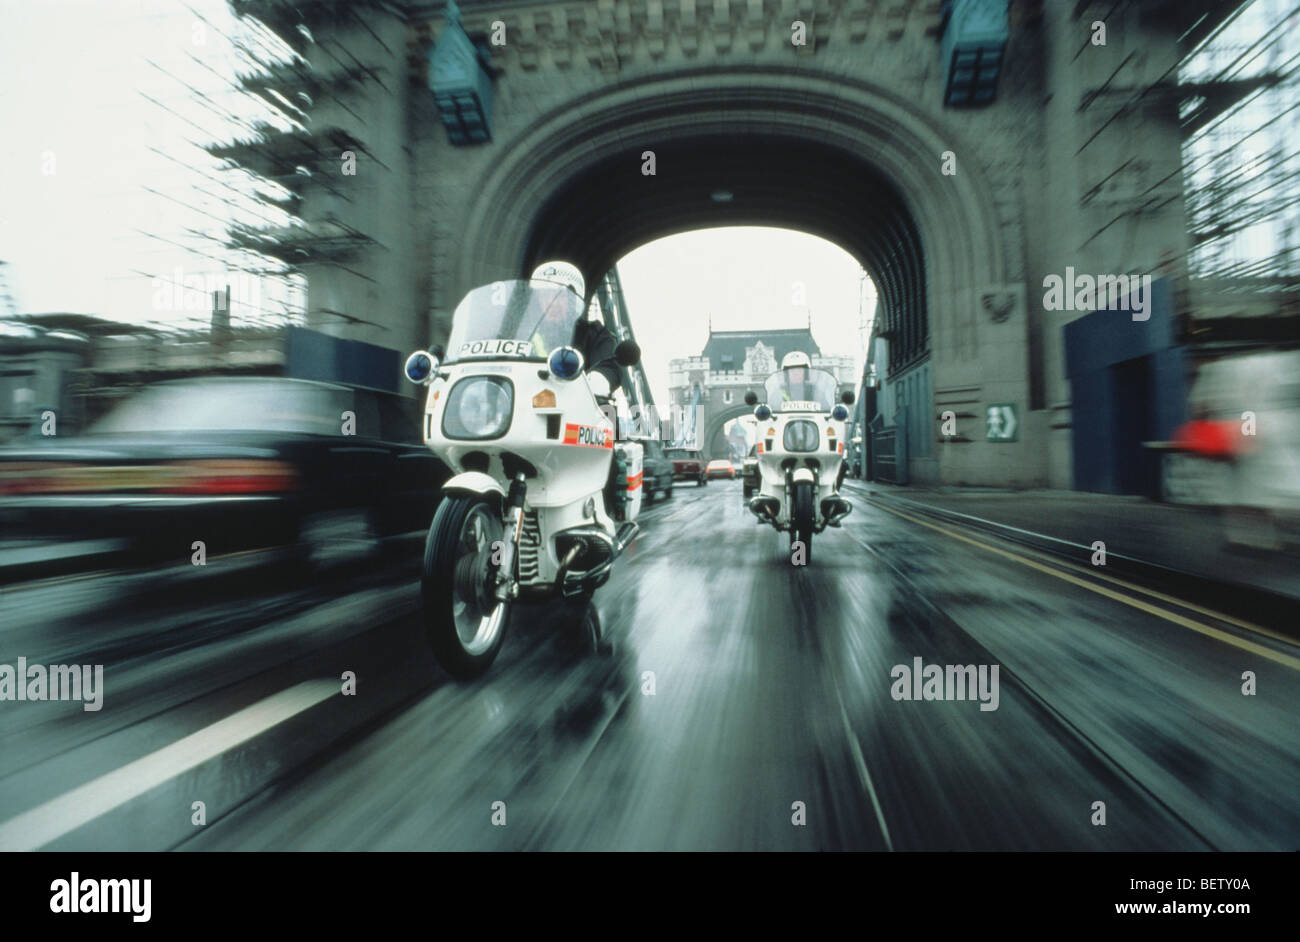 Police motorbikes riding over Tower Bridge Stock Photo